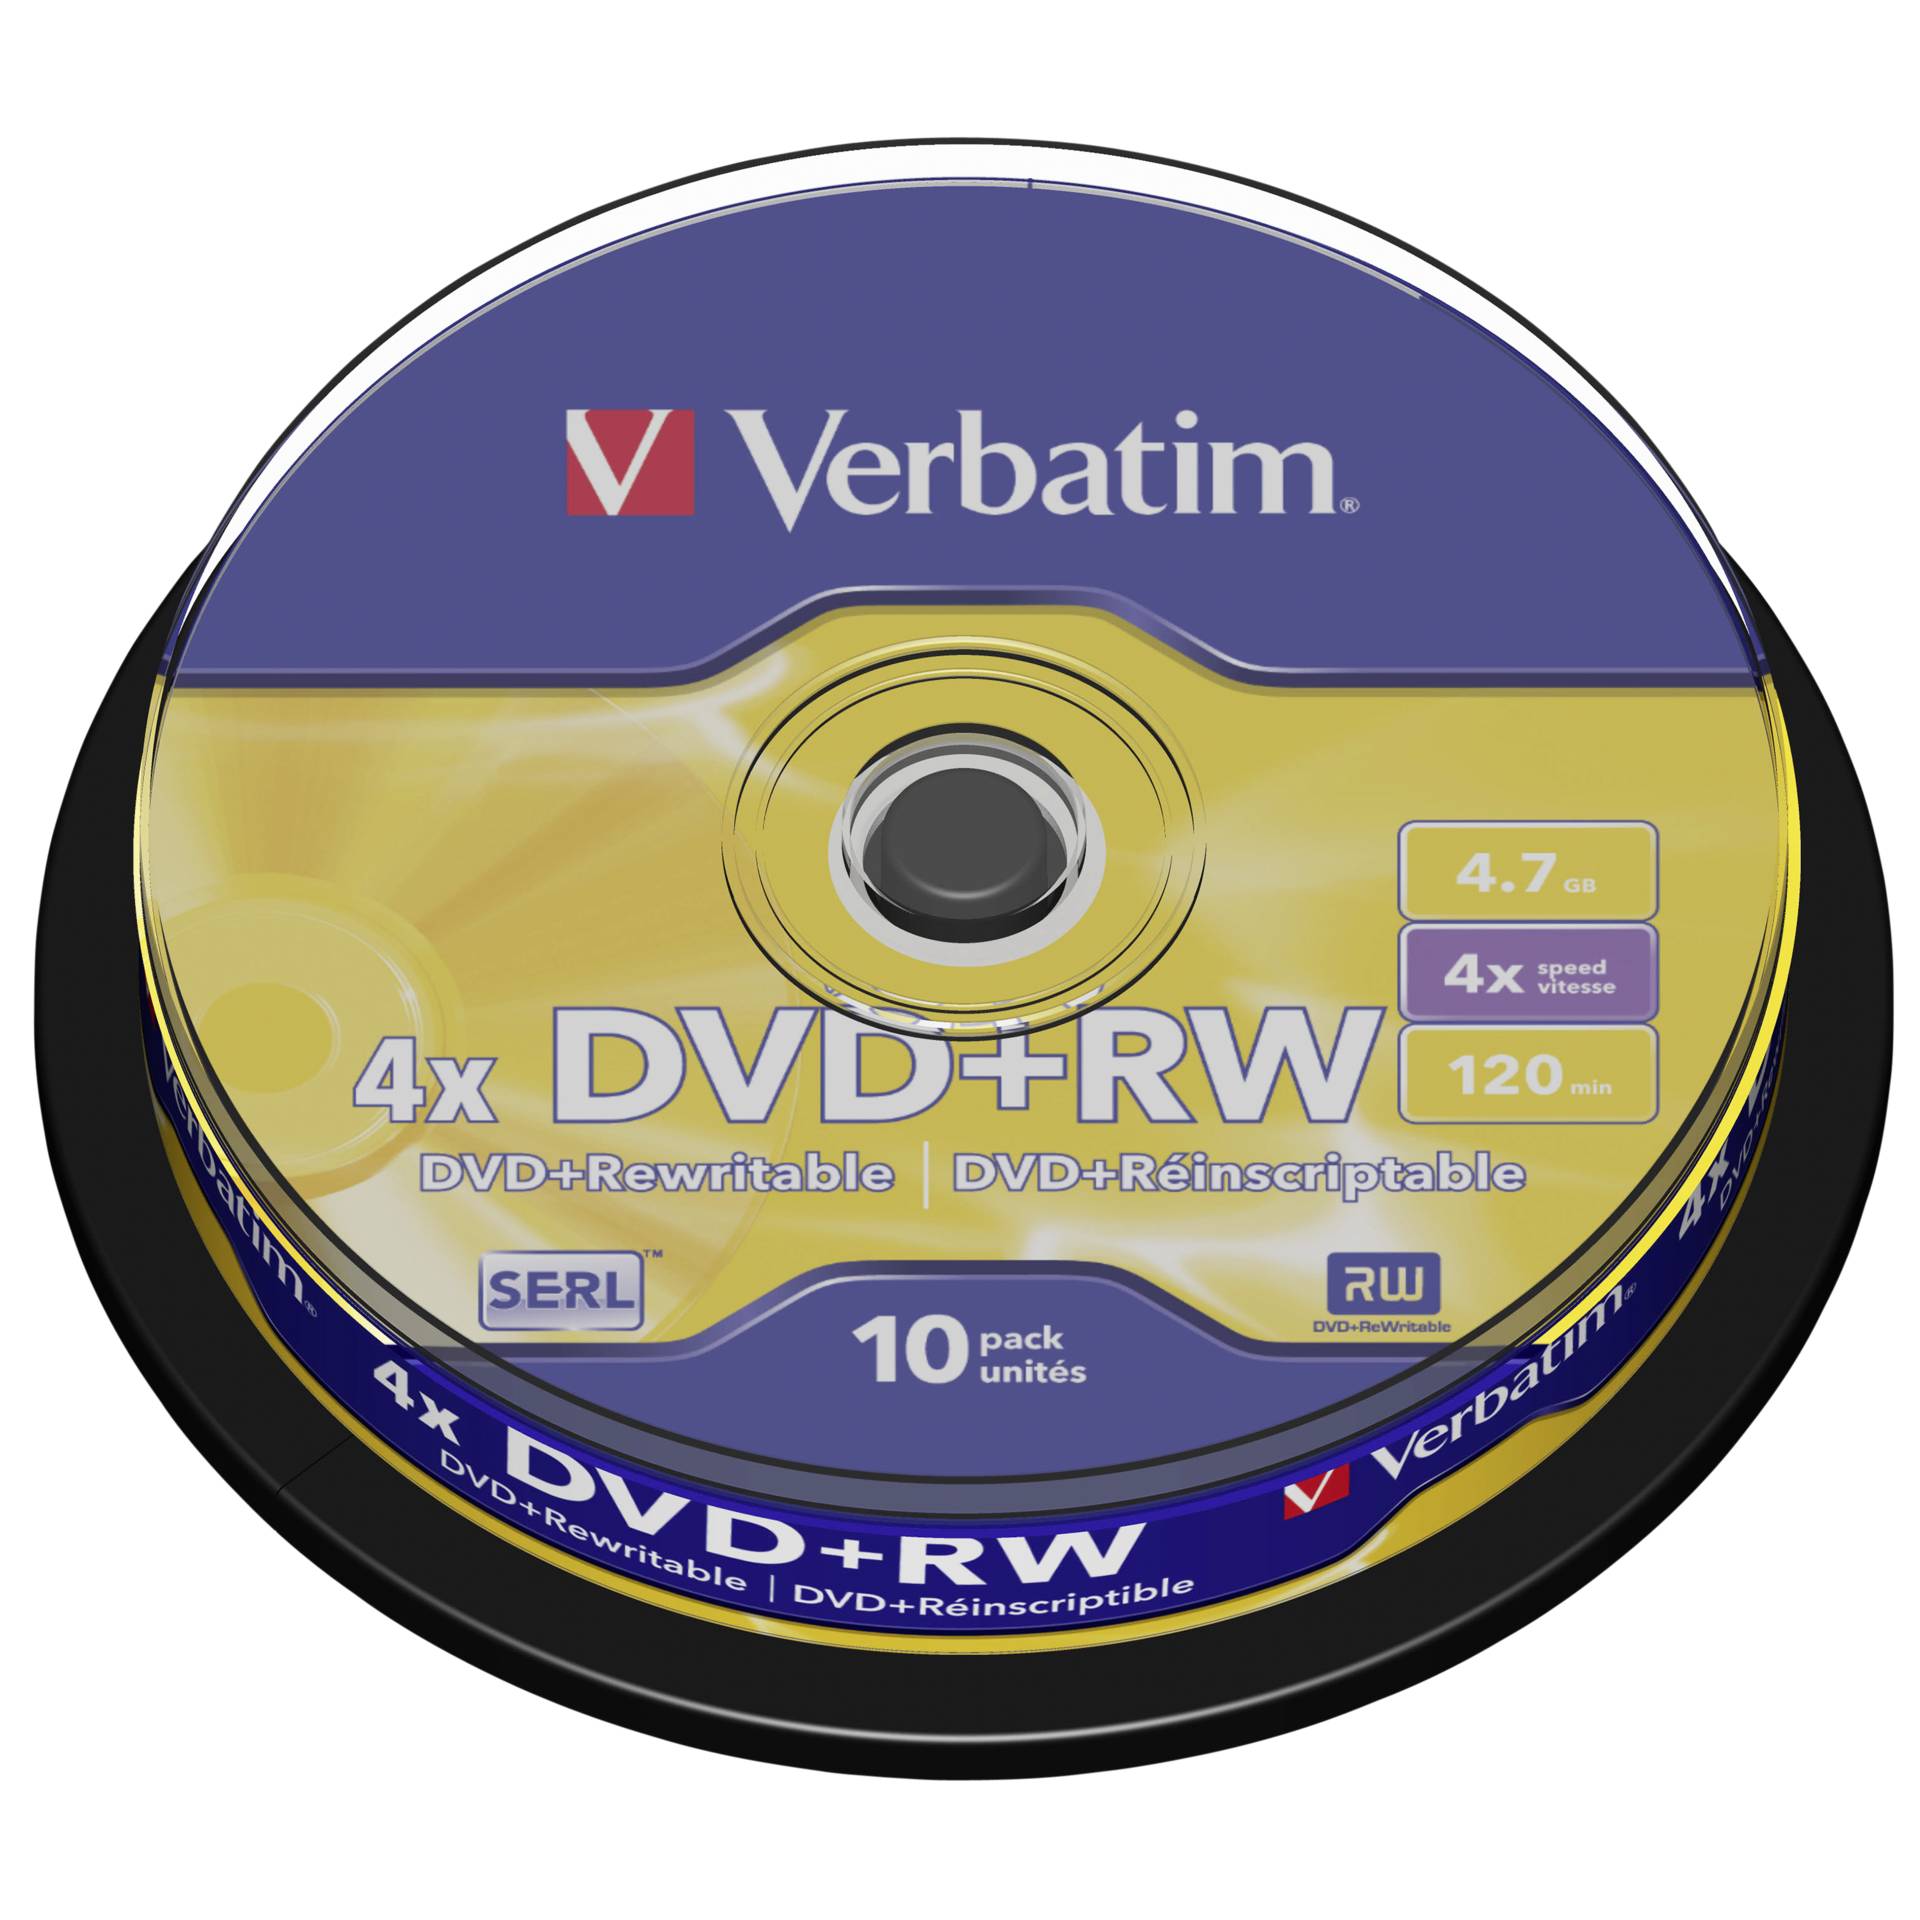 1x10 Verbatim DVD+RW 4,7GB 4x Speed, opaco argento Cakebox